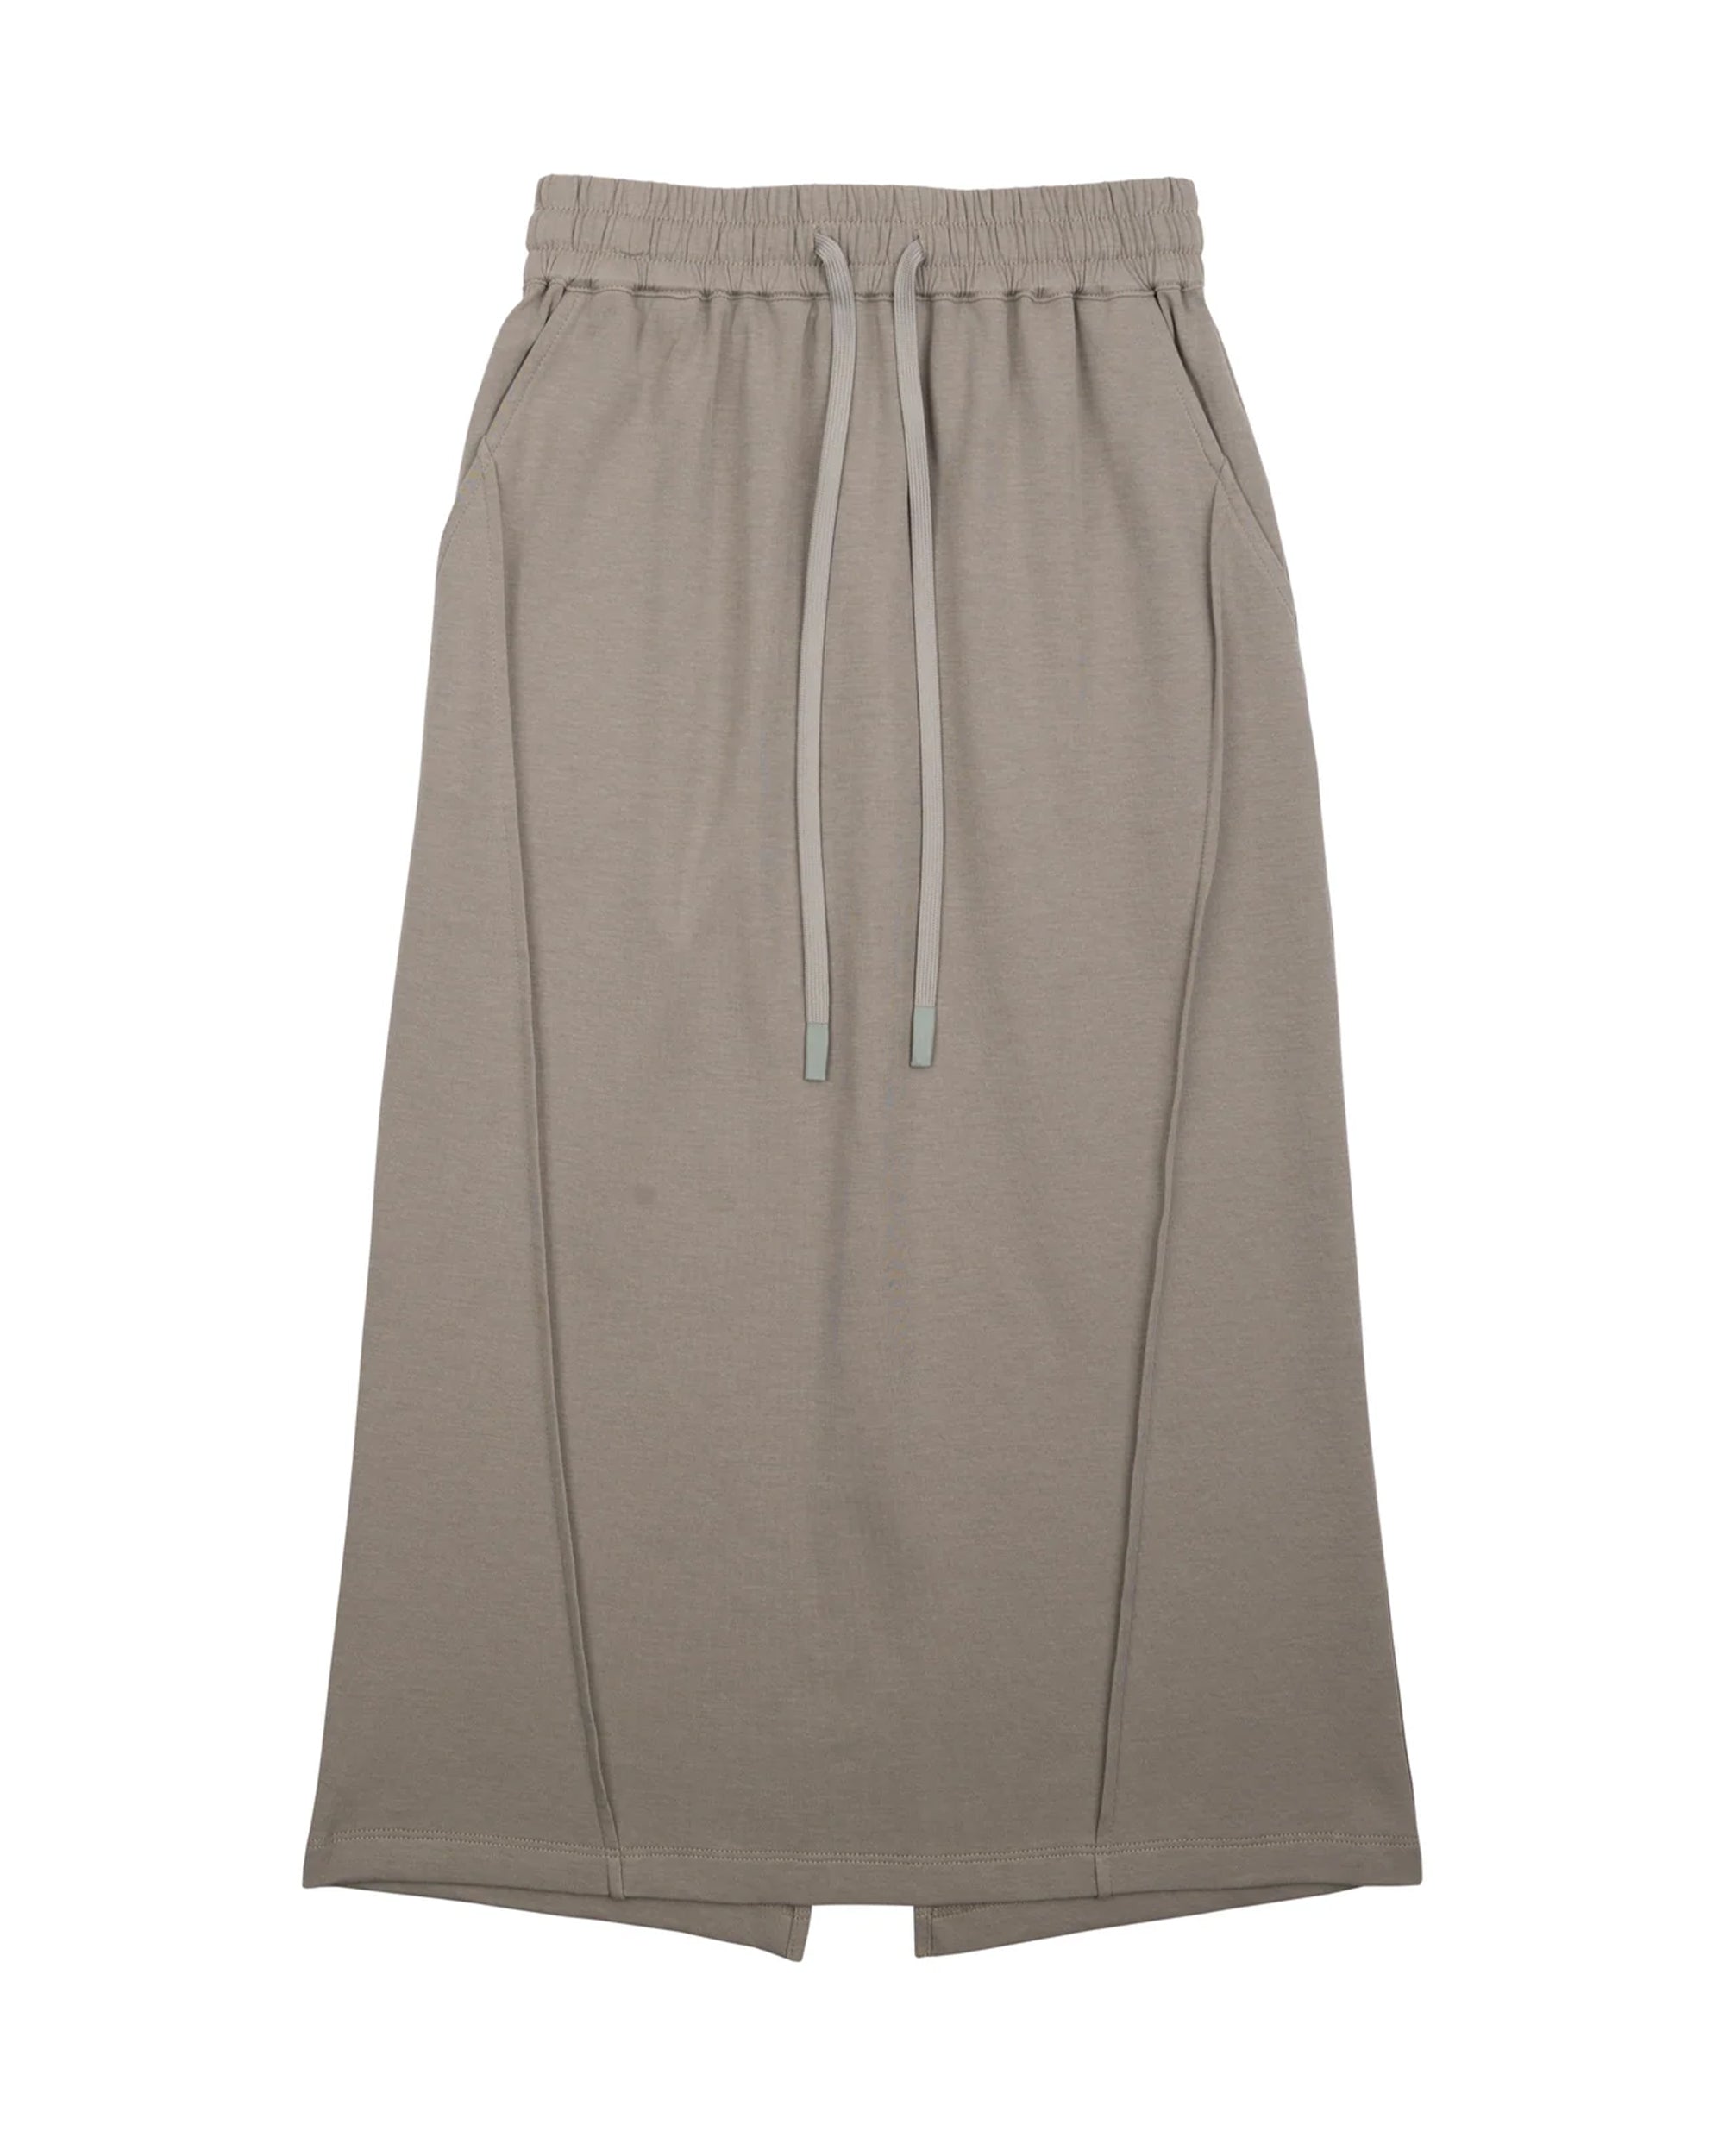 NORAH SUE Comfy Sweat Skirt